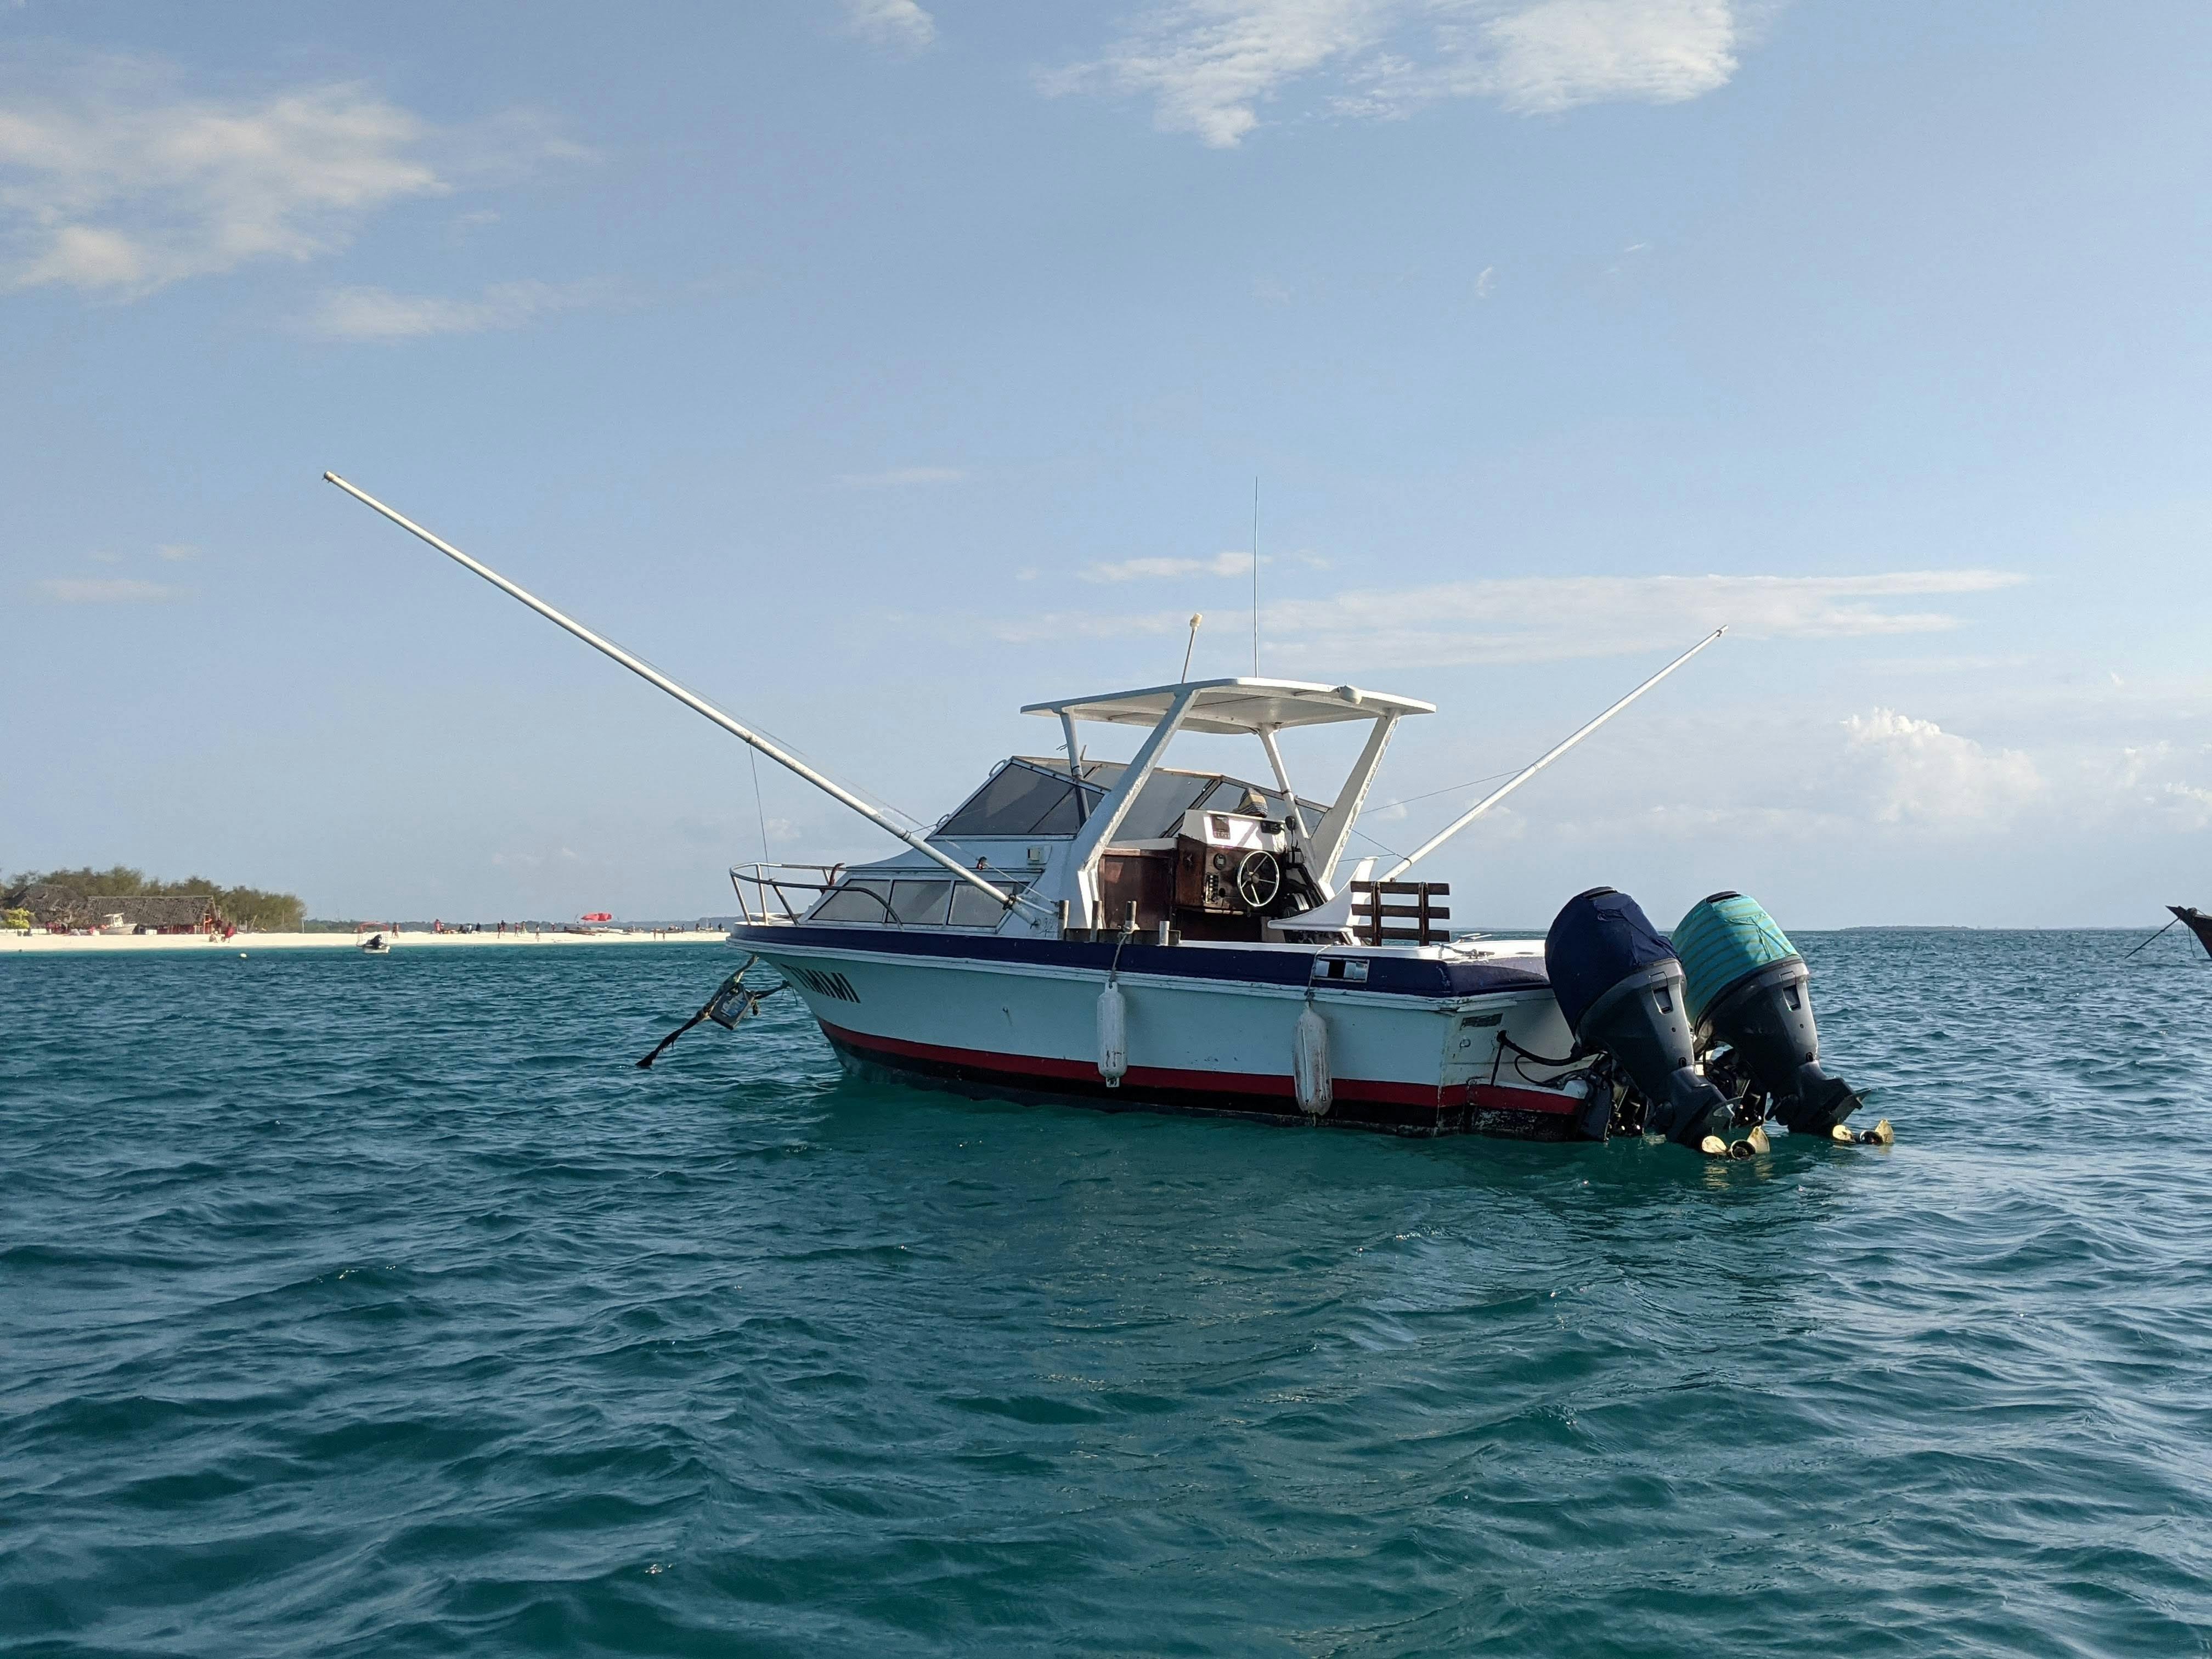 Deep sea fishing full-day tour in Zanzibar